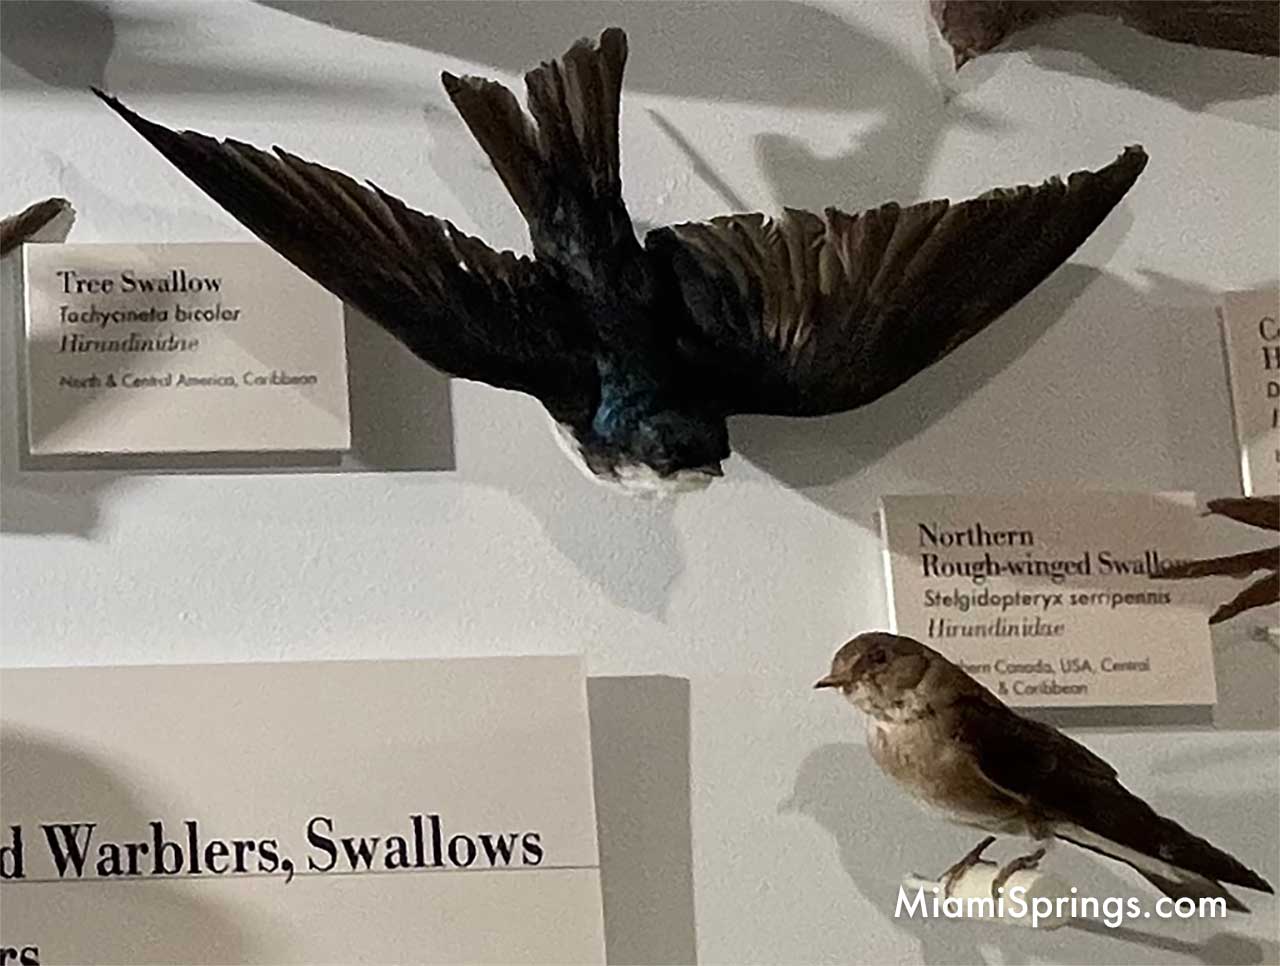 Tree Swallow displayed at the Harvard Museum of Natural History